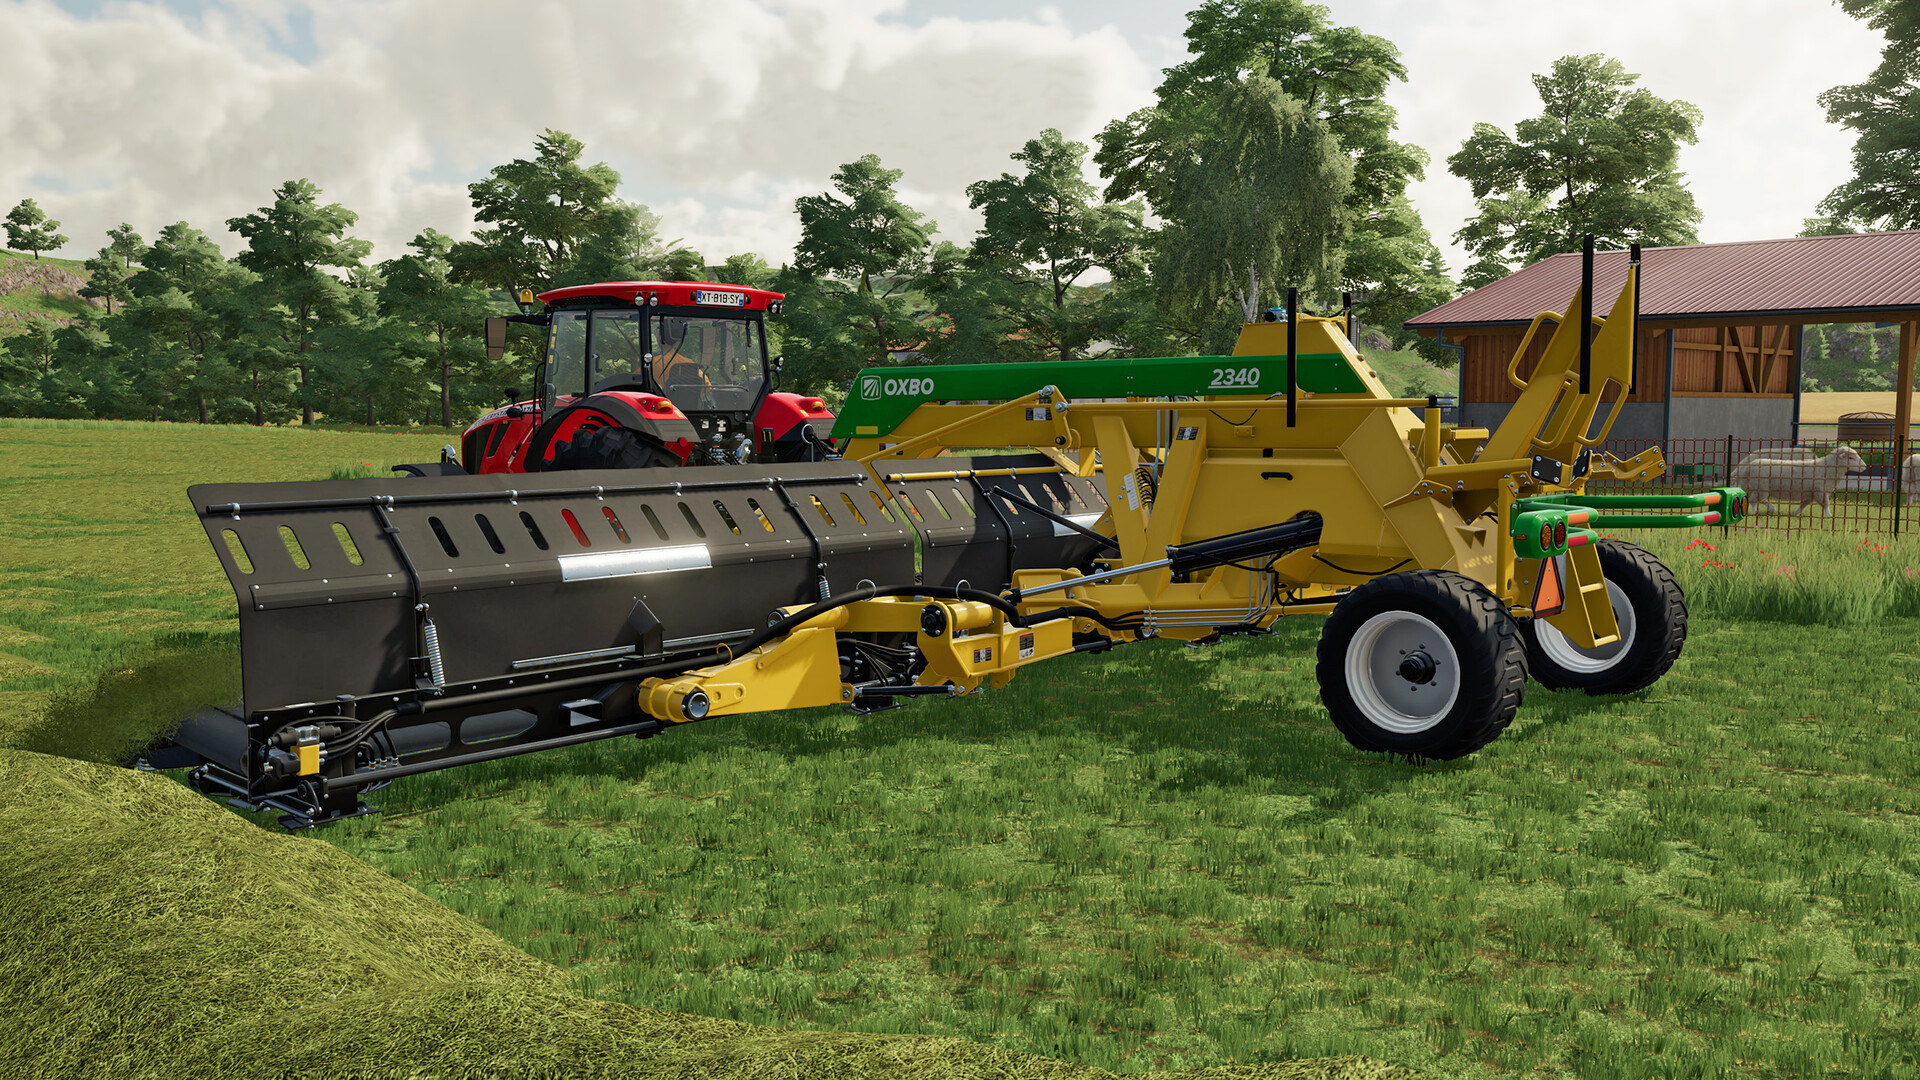 Farming Simulator 22 - OXBO Pack DLC Steam CD Key